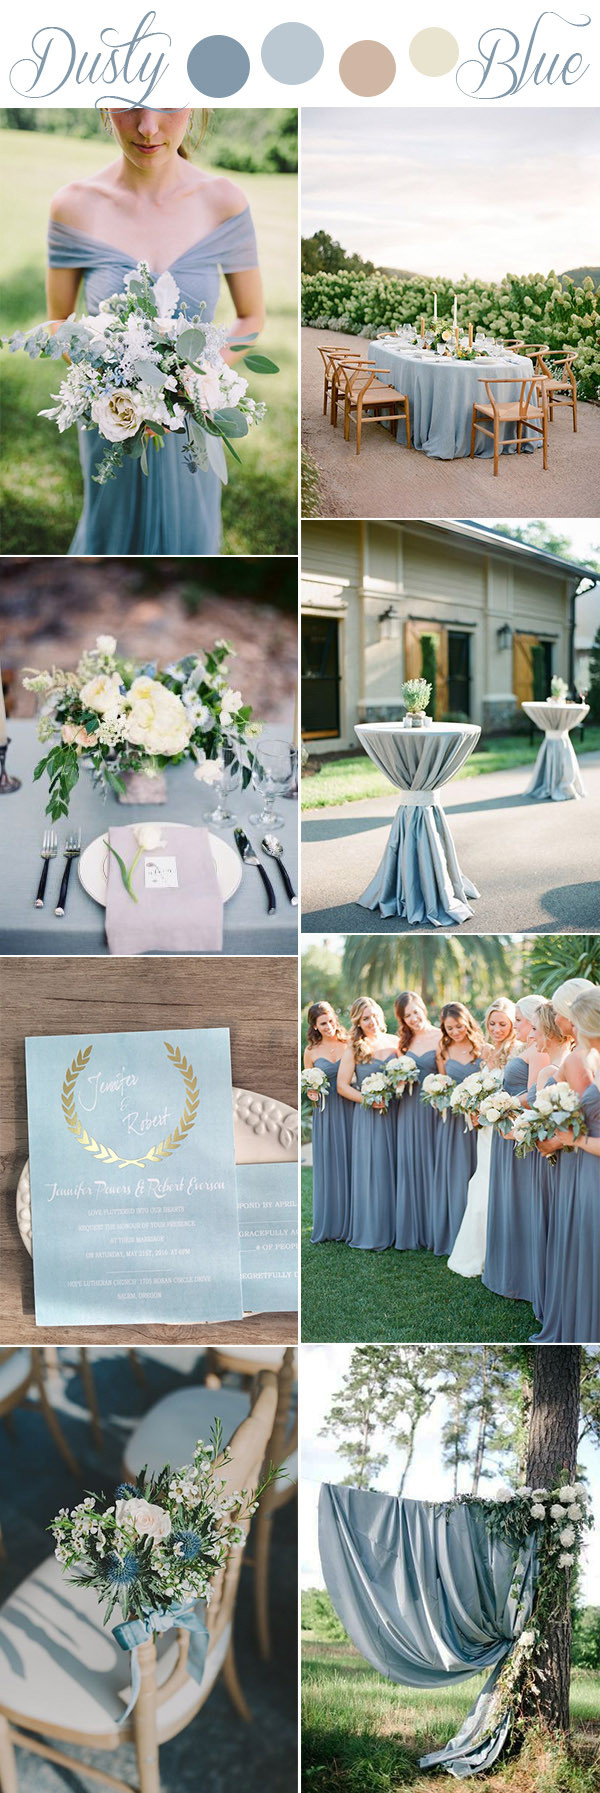 Rustic Wedding Color Schemes
 7 Gorgeous Rustic Romantic and Elegant Wedding Ideas